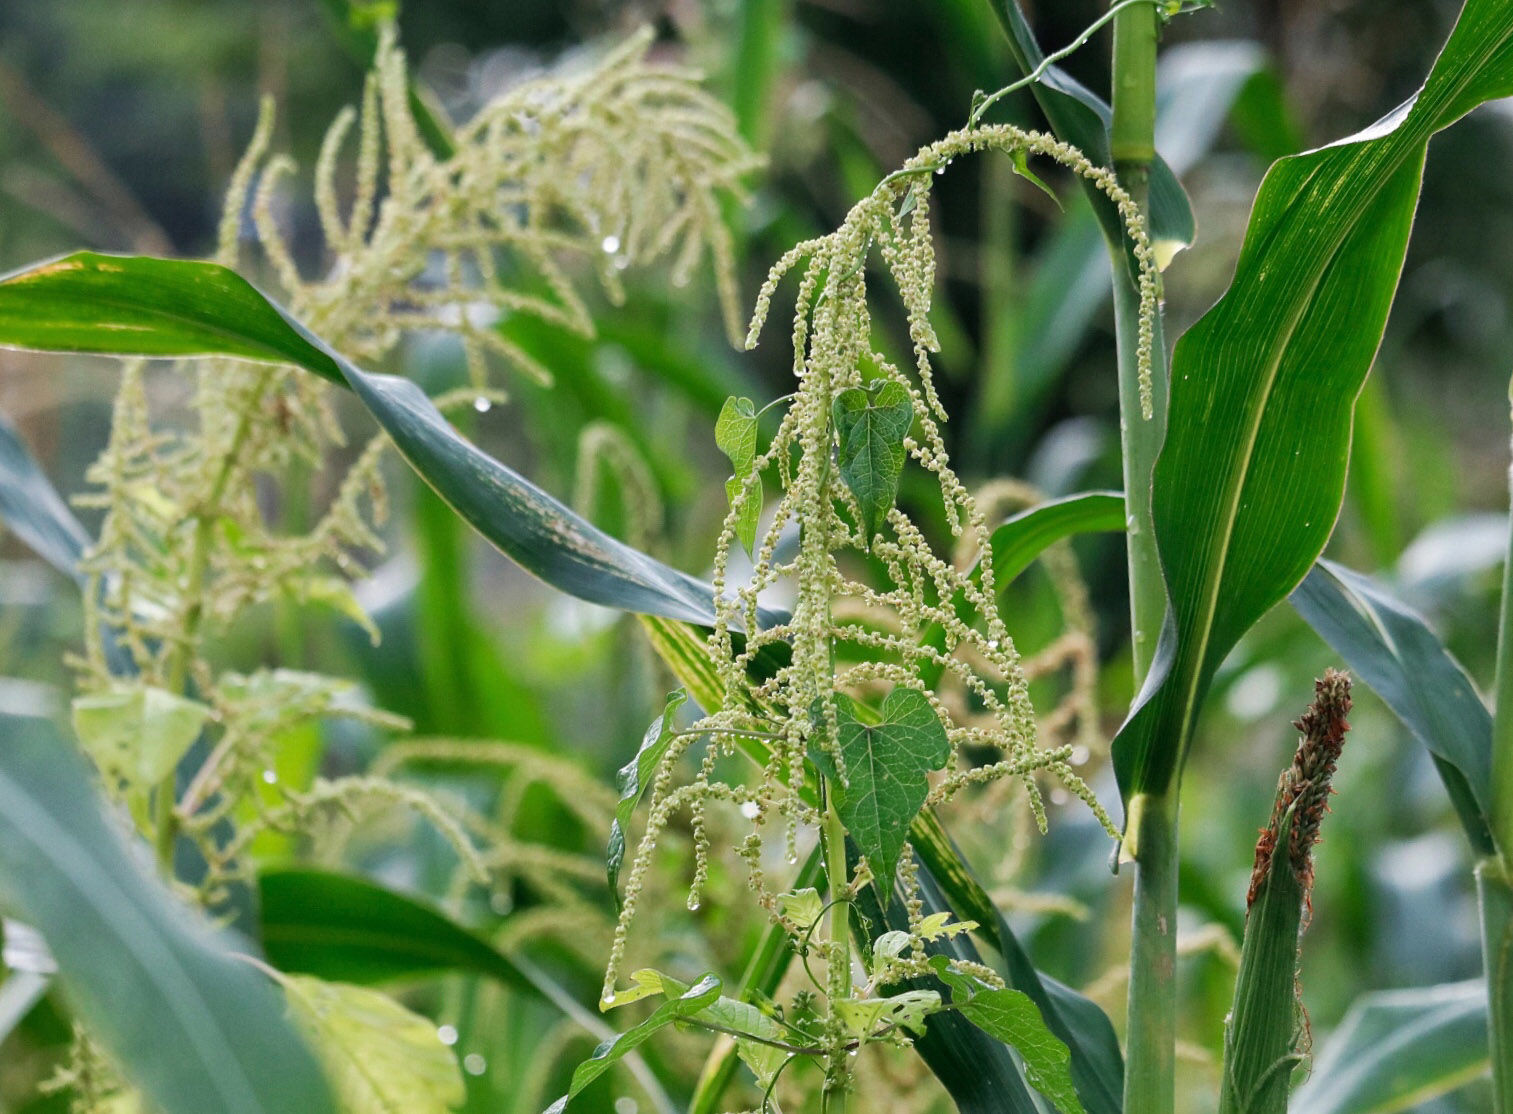 Corn grows at the Bair Road Garden in Northwest D.C. (WTOP/Kate Ryan)